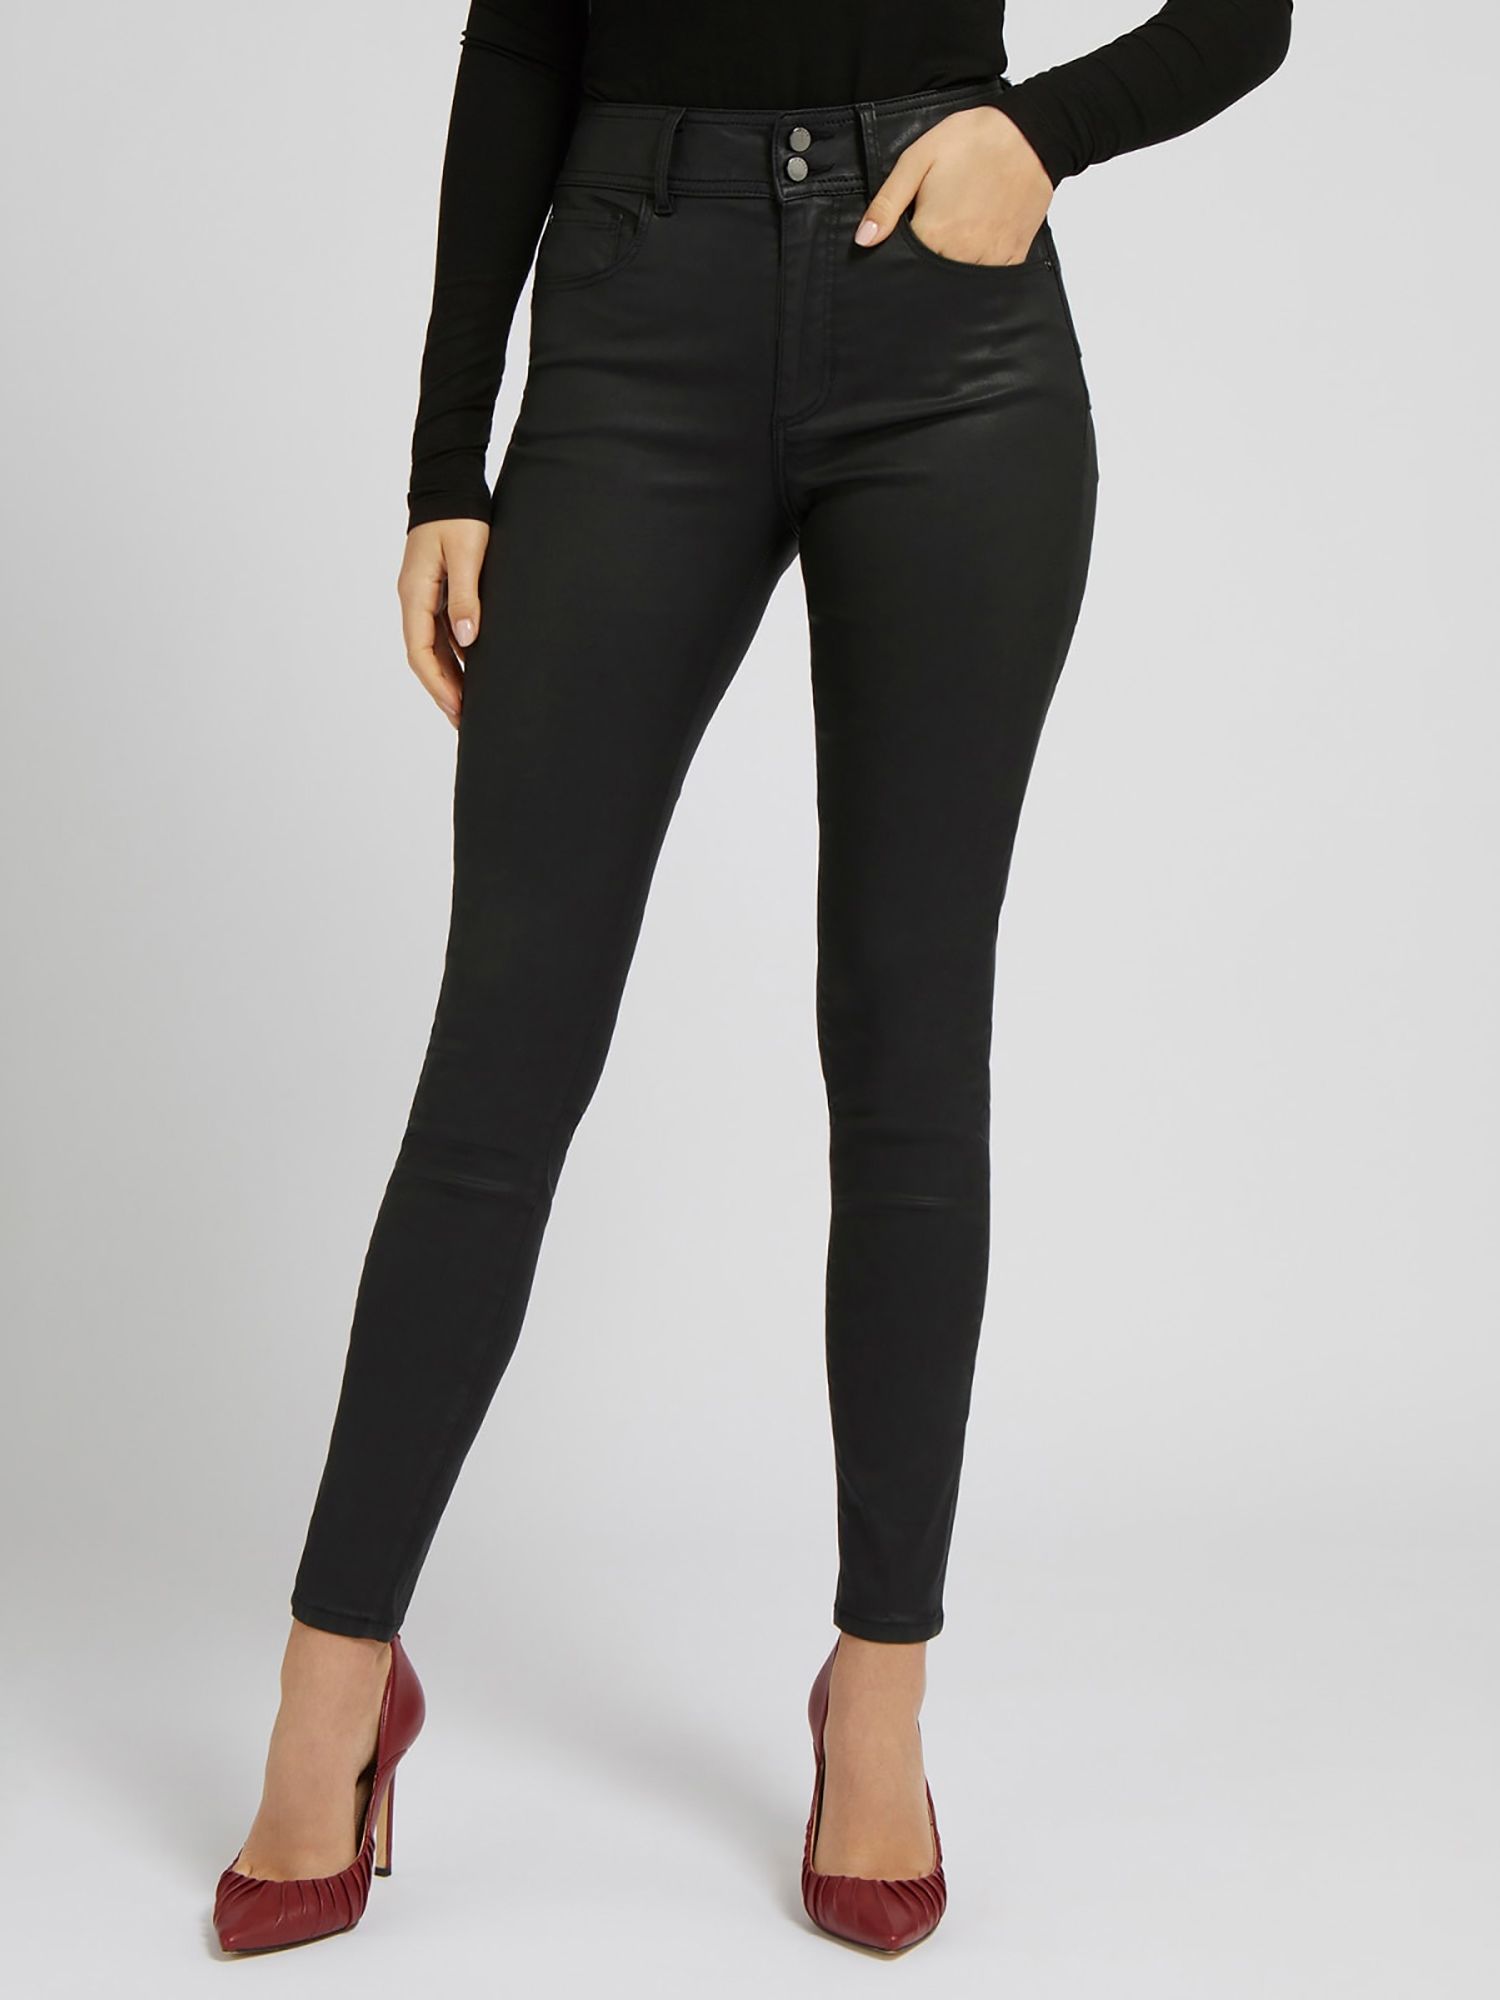 GUESS Shape Up High-Rise Denim Jeans, Black, W27/L31